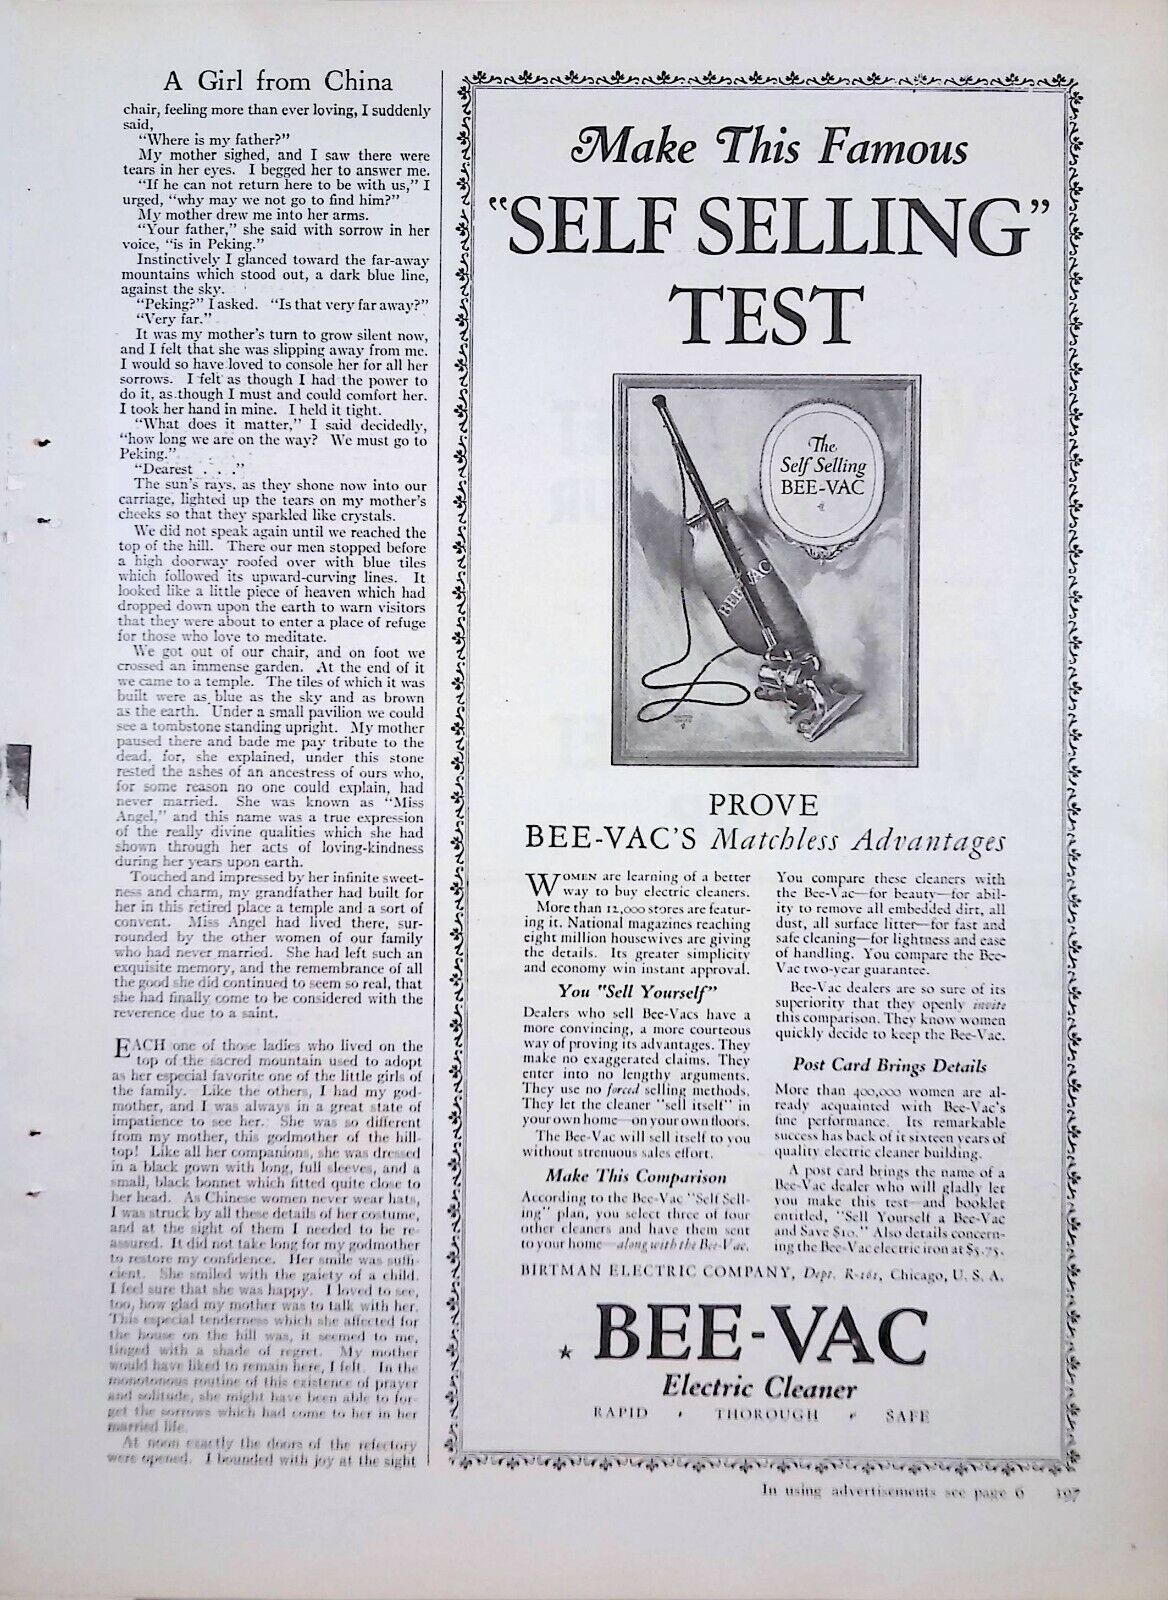 Bee Vac Electric Cleaner Print Ad Good Housekeeping Magazine November 1925 